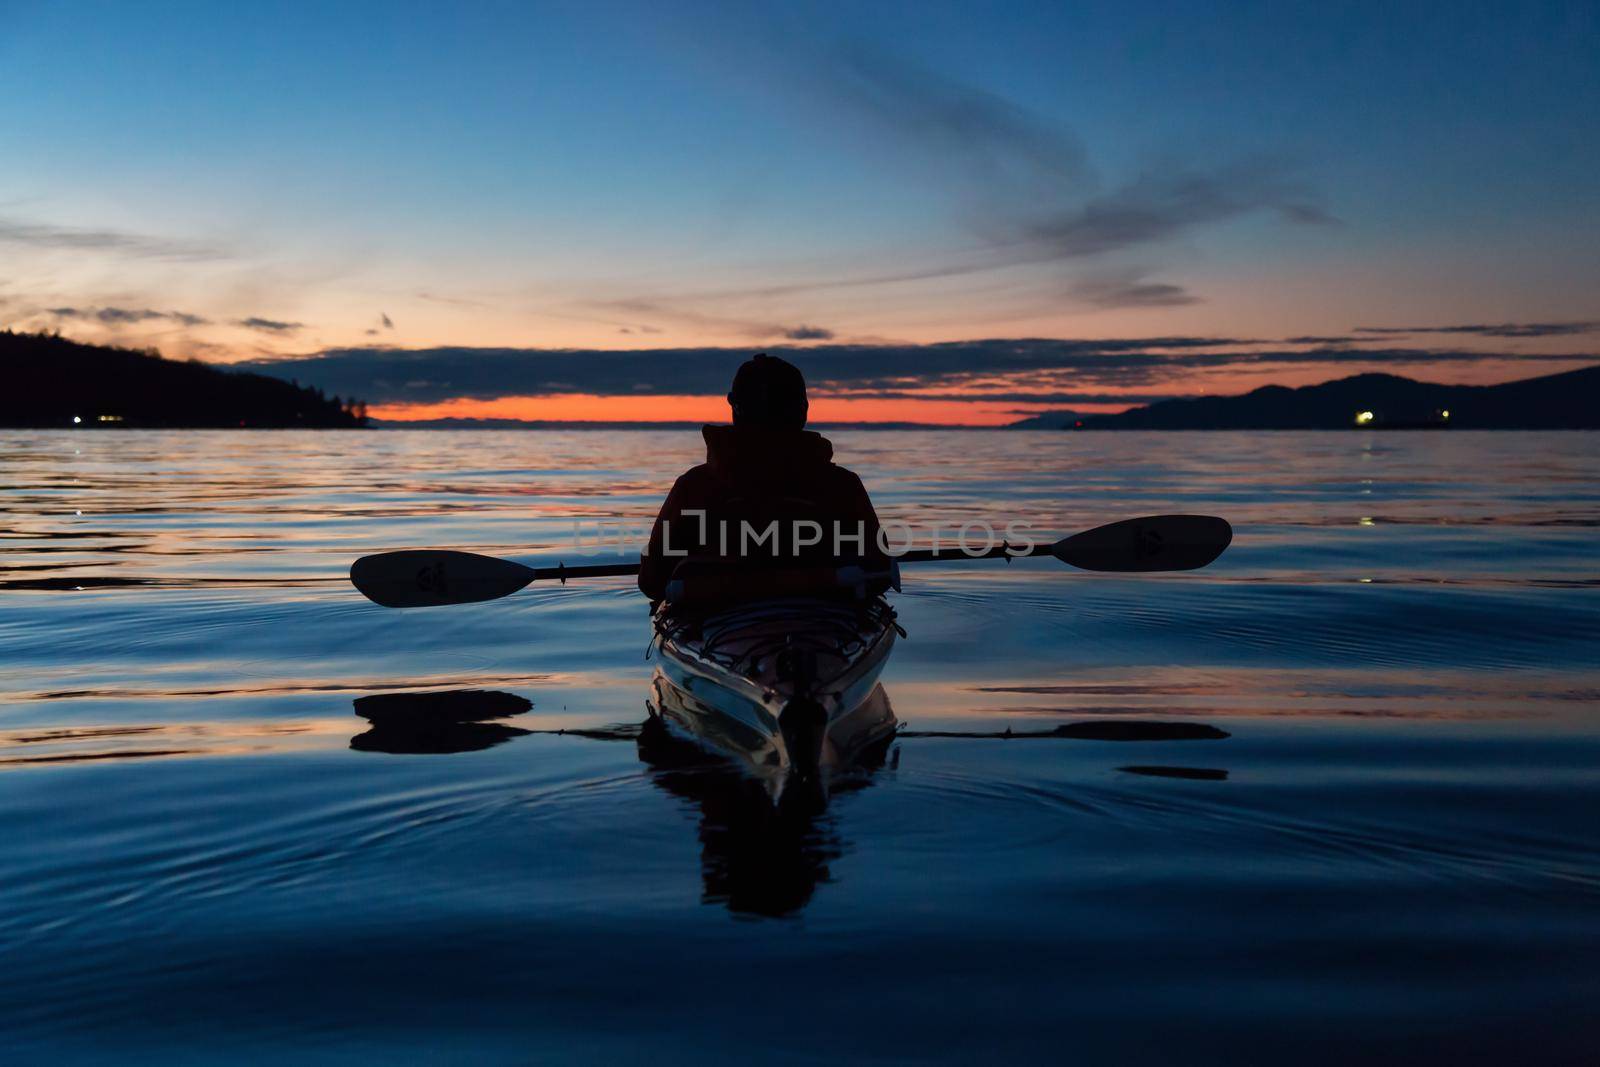 Man Kayaking on a sea kayak during a vibrant sunset. by edb3_16